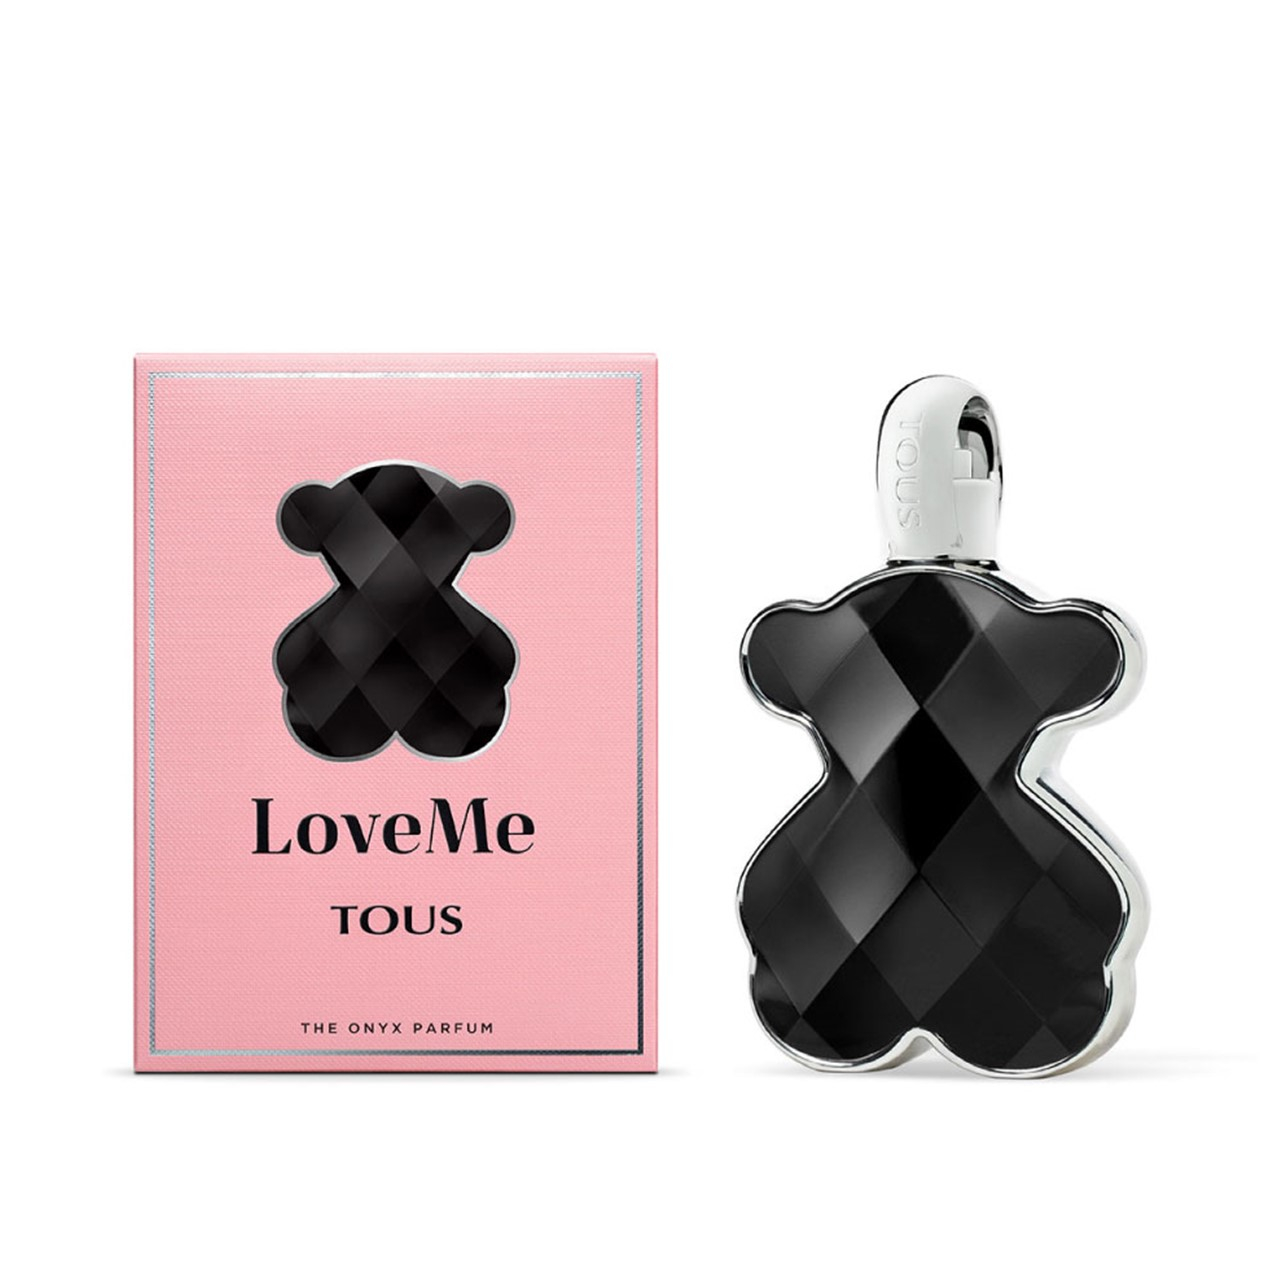 Buy Tous LoveMe The Onyx Parfum 90ml (3.04fl oz) · USA